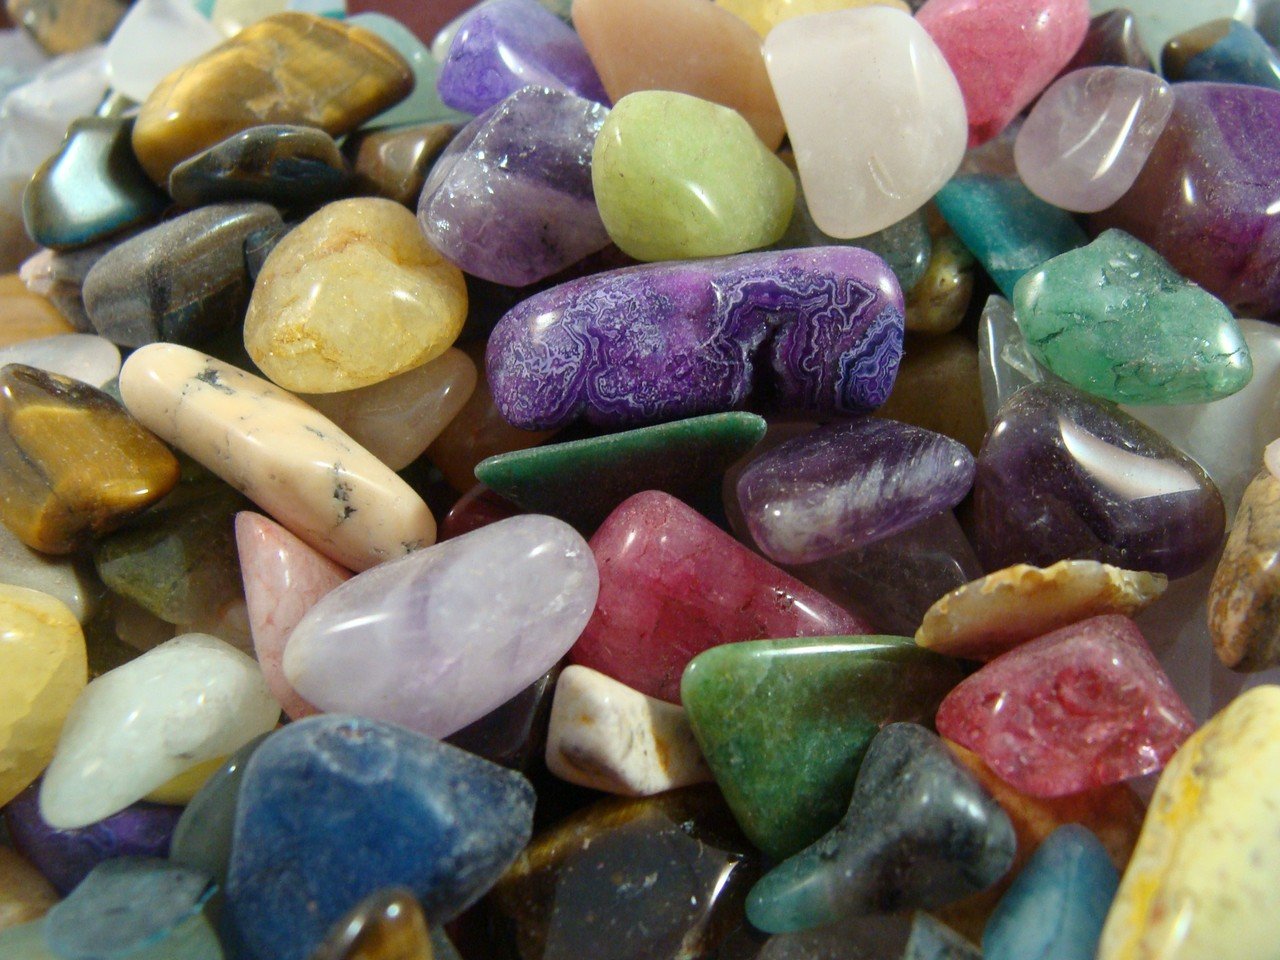 Small stones